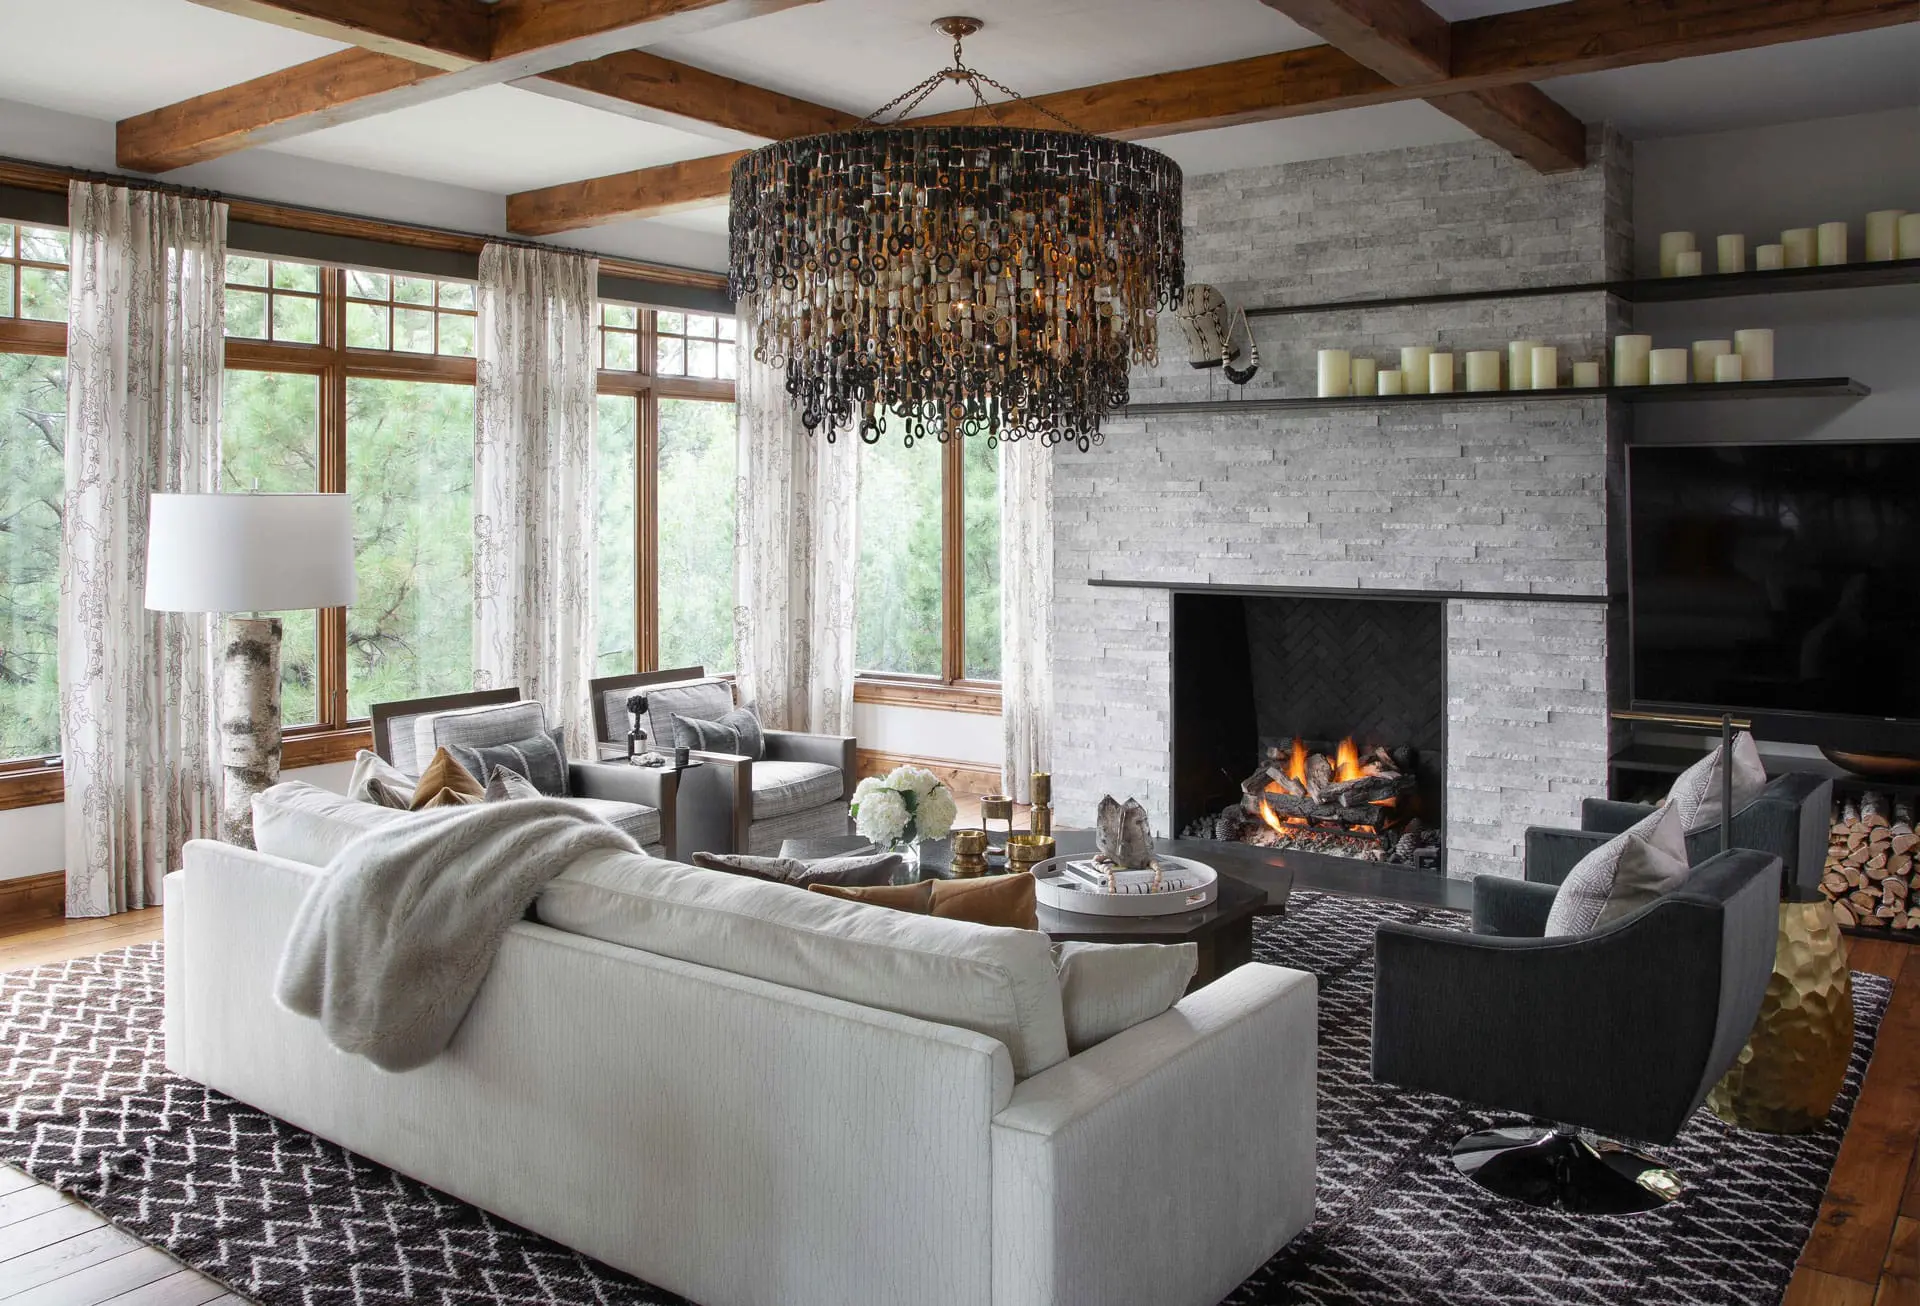 Colorado Mountain Home designed by luxury interior design firm, Marc-Michaels Interior design